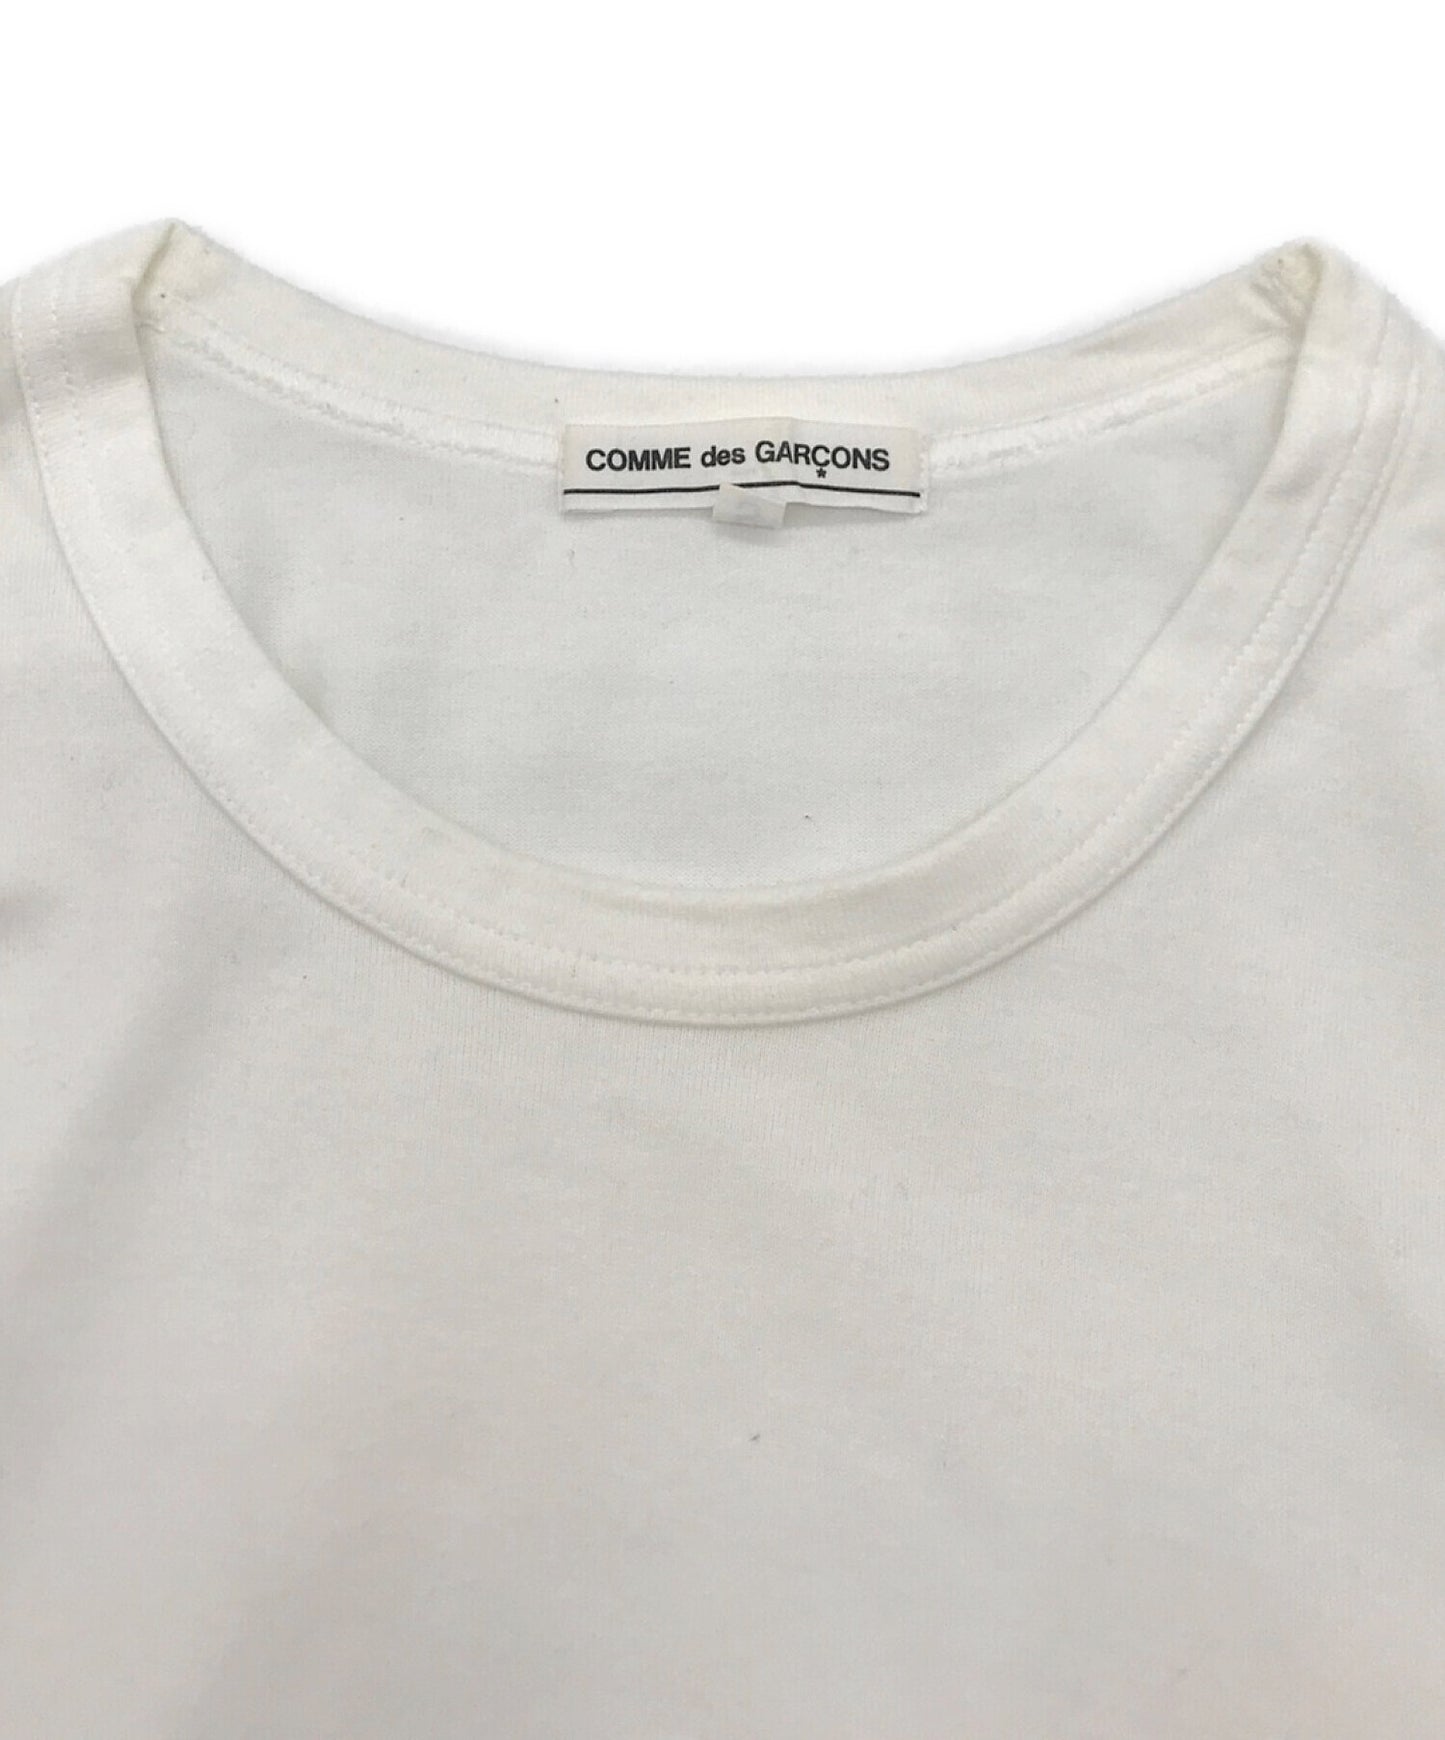 Comme des Garcons 체크 스위치 스위치 인쇄 티셔츠 OB-T025